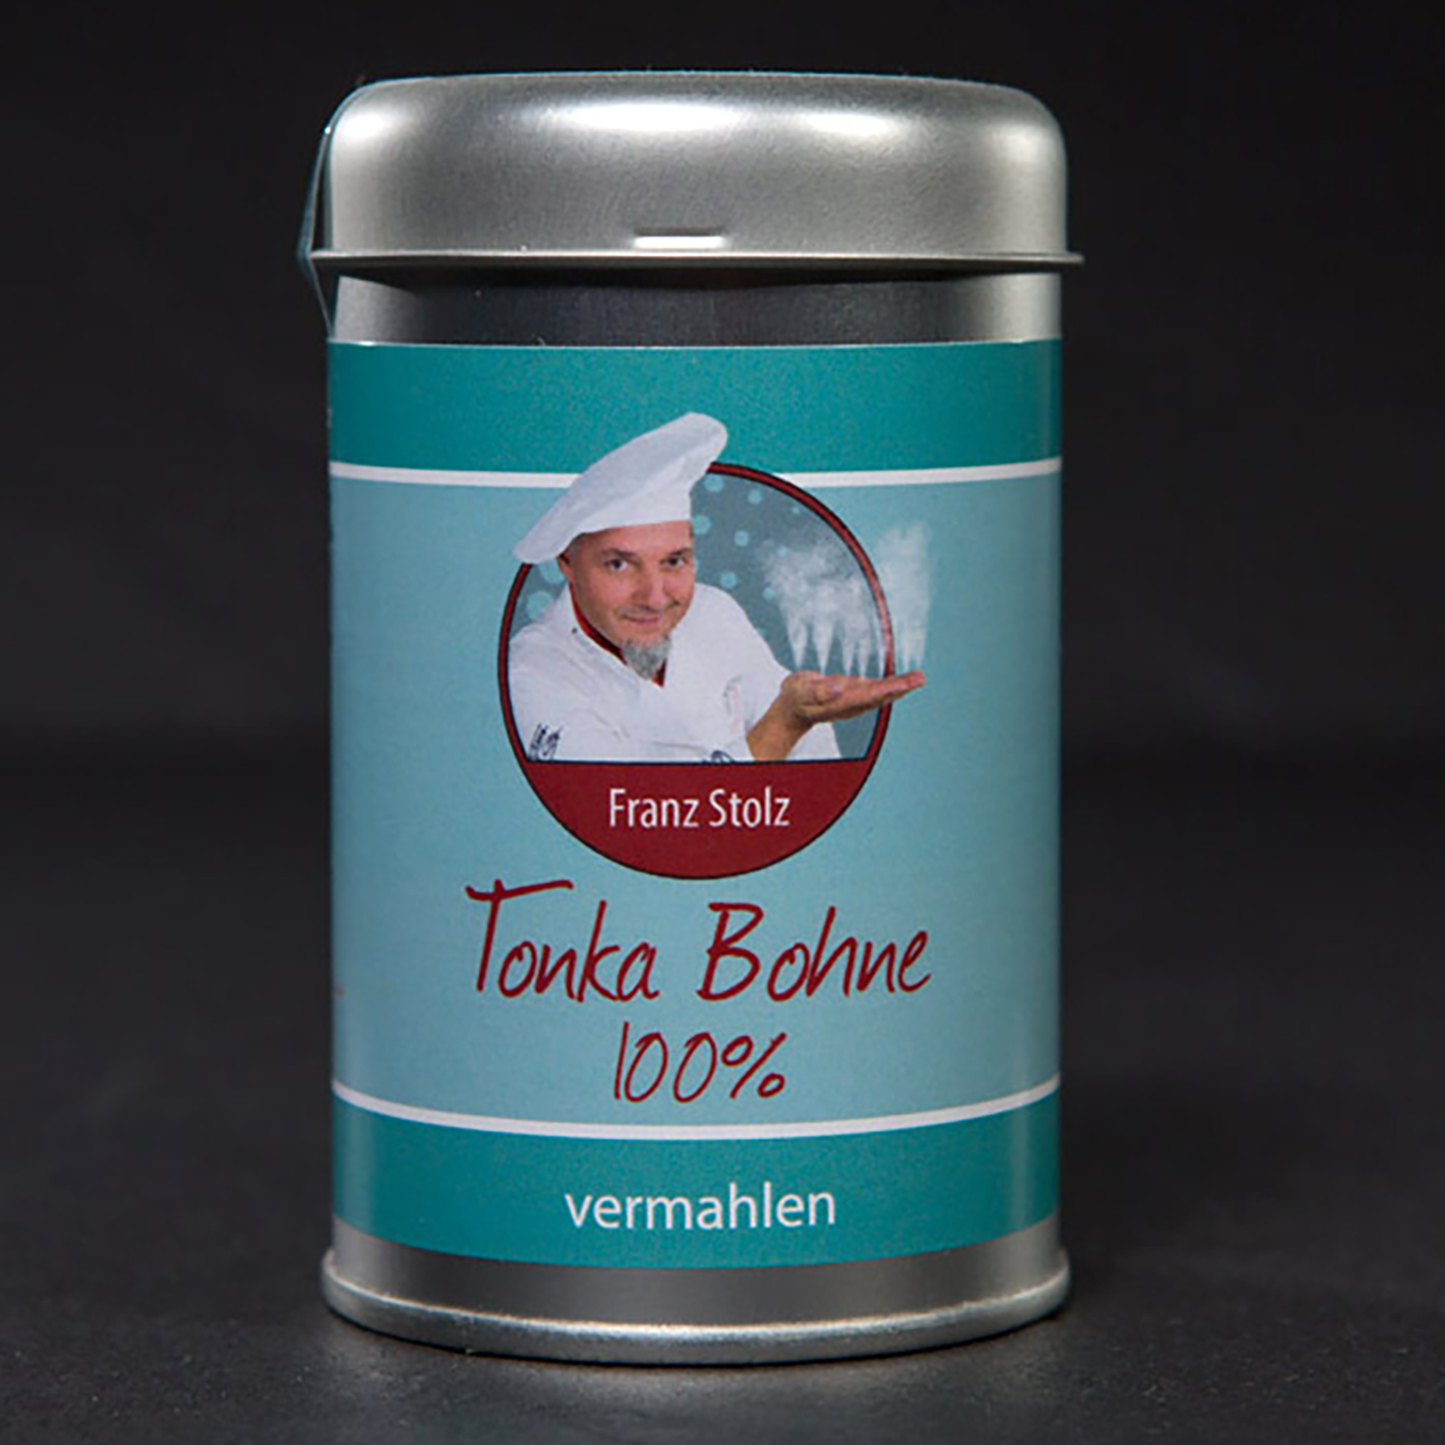 Tonka Bohne 100 %